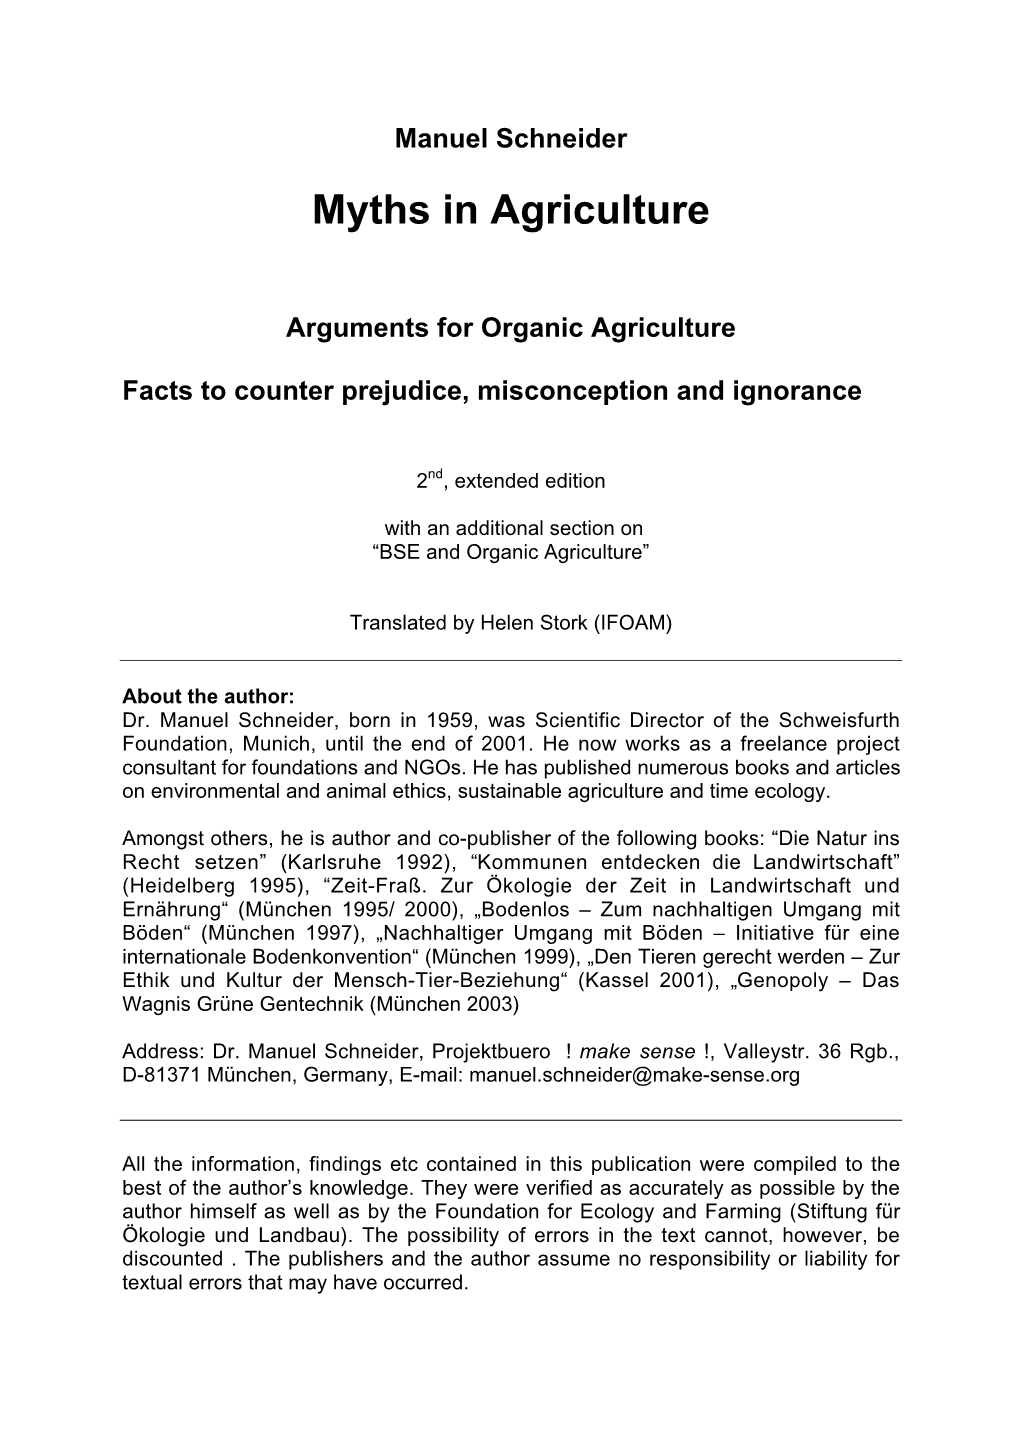 Manuel Schneider Myths in Agriculture